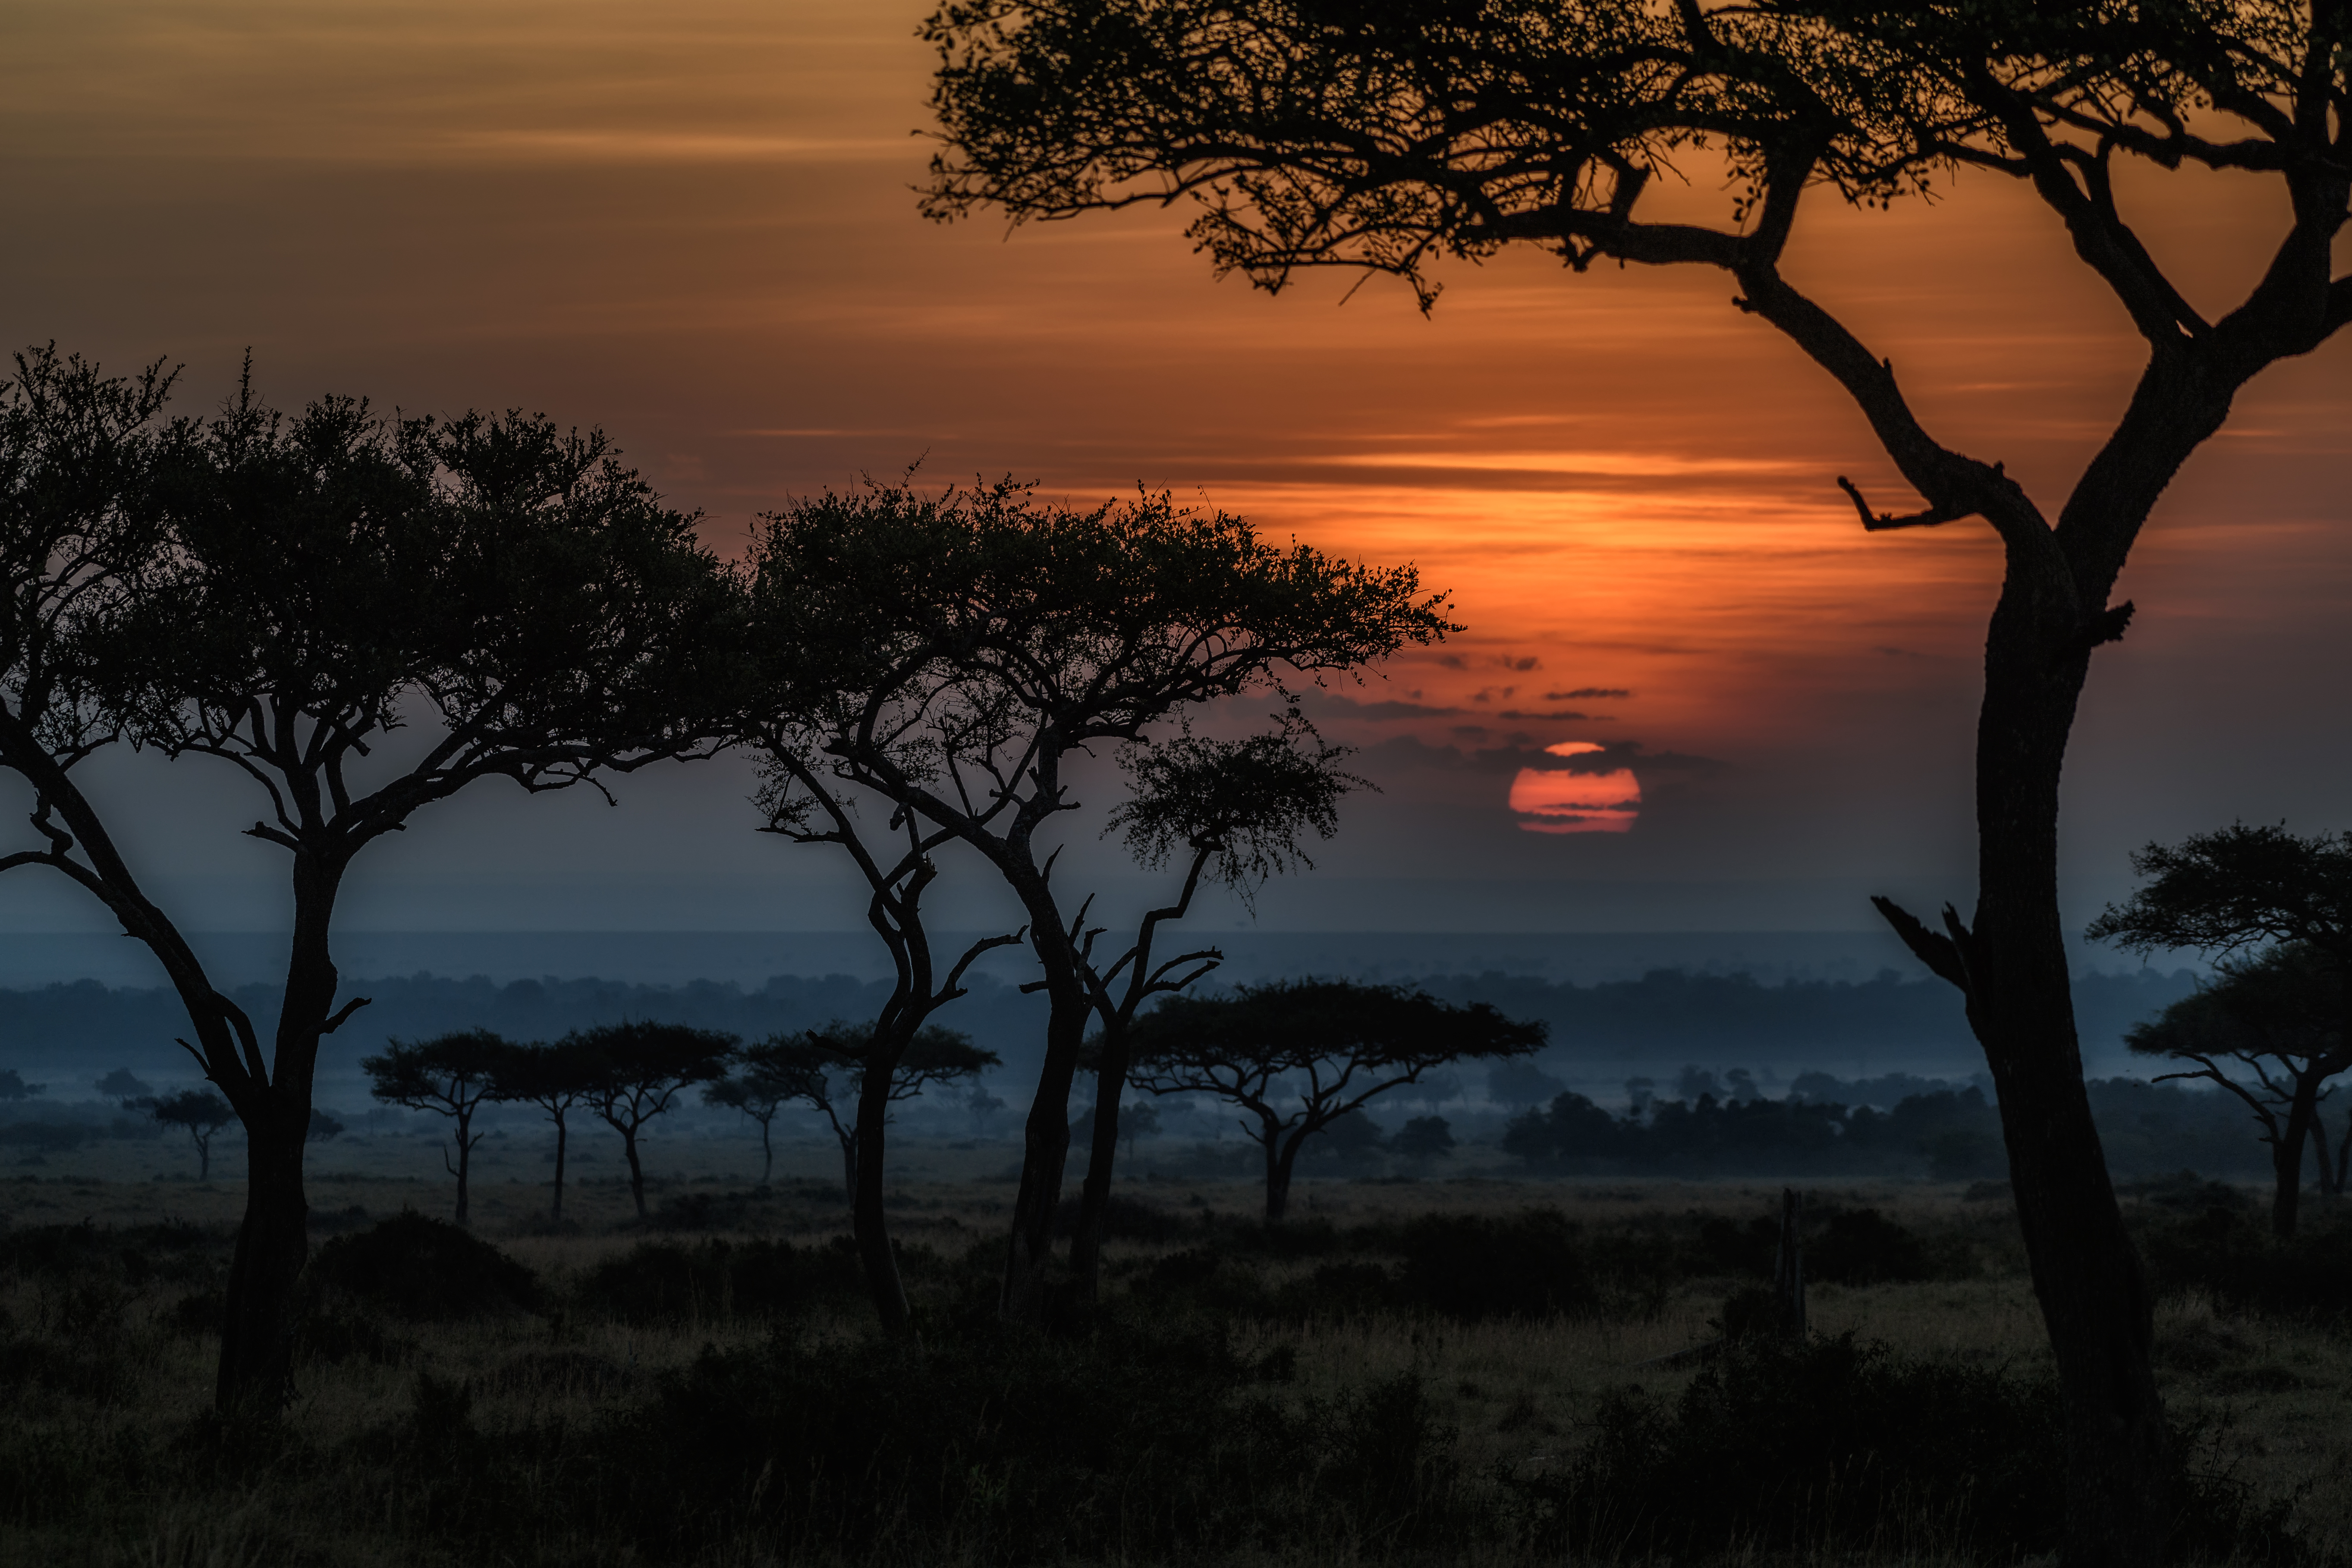 Sunrise In Africa 5k Retina Ultra HD Wallpaper Background Image